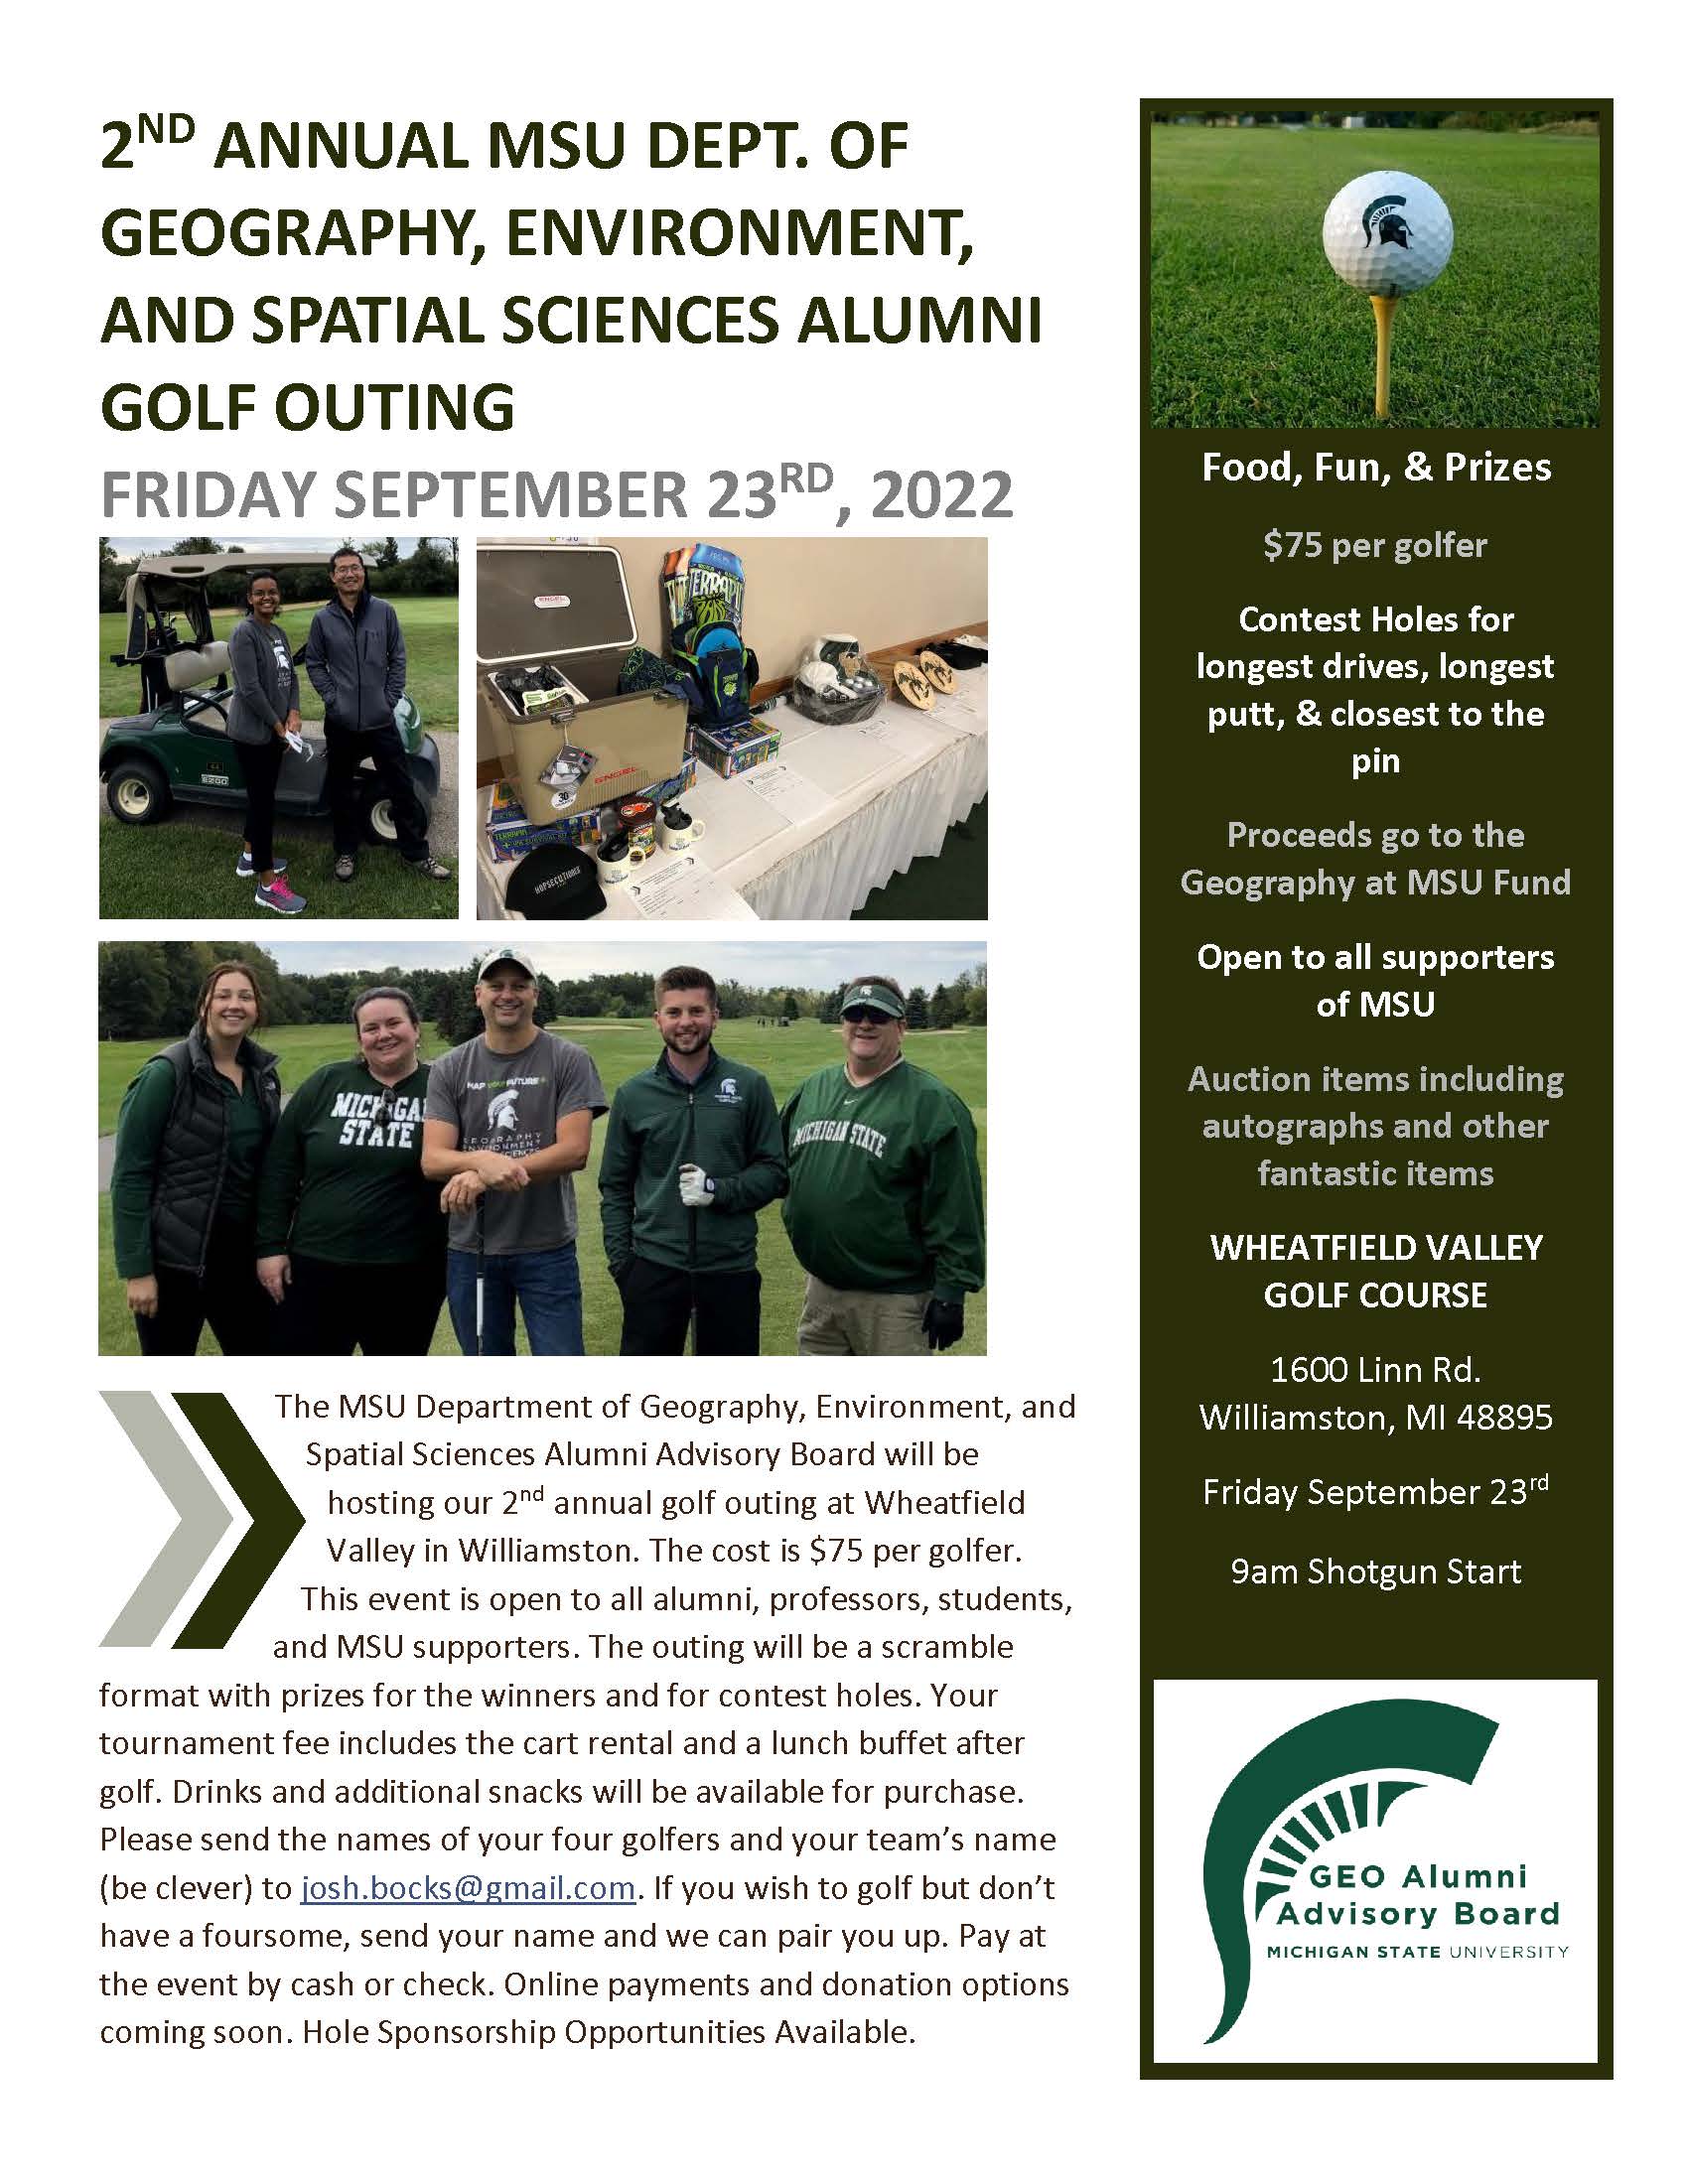 Flyer for GEO Alumni Advisory Board Golf Outing